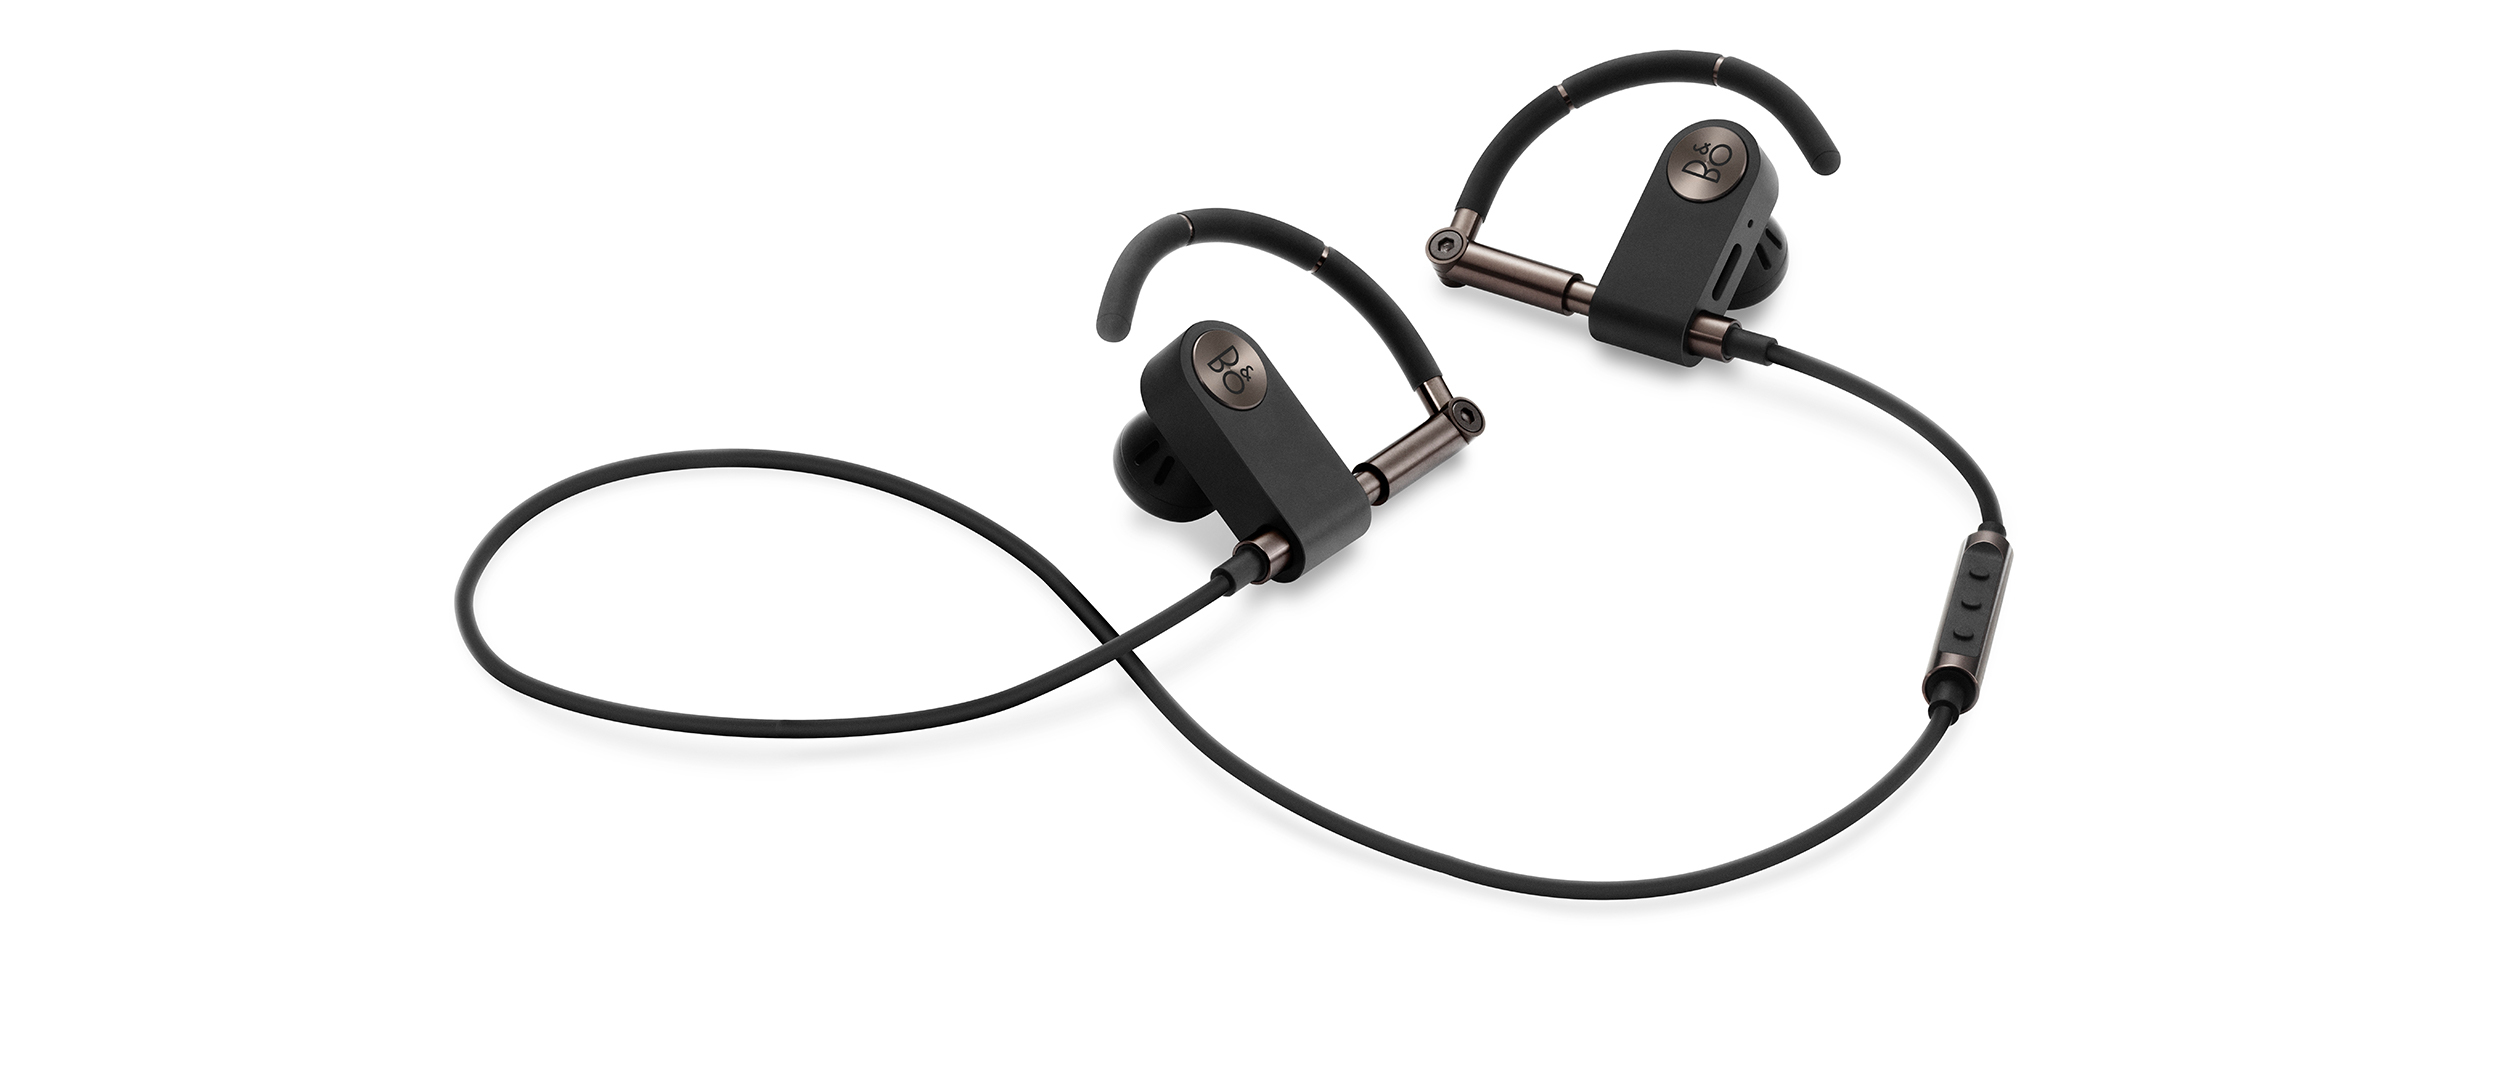 bang & olufsen earset headset wireless in-ear calls/music usb...